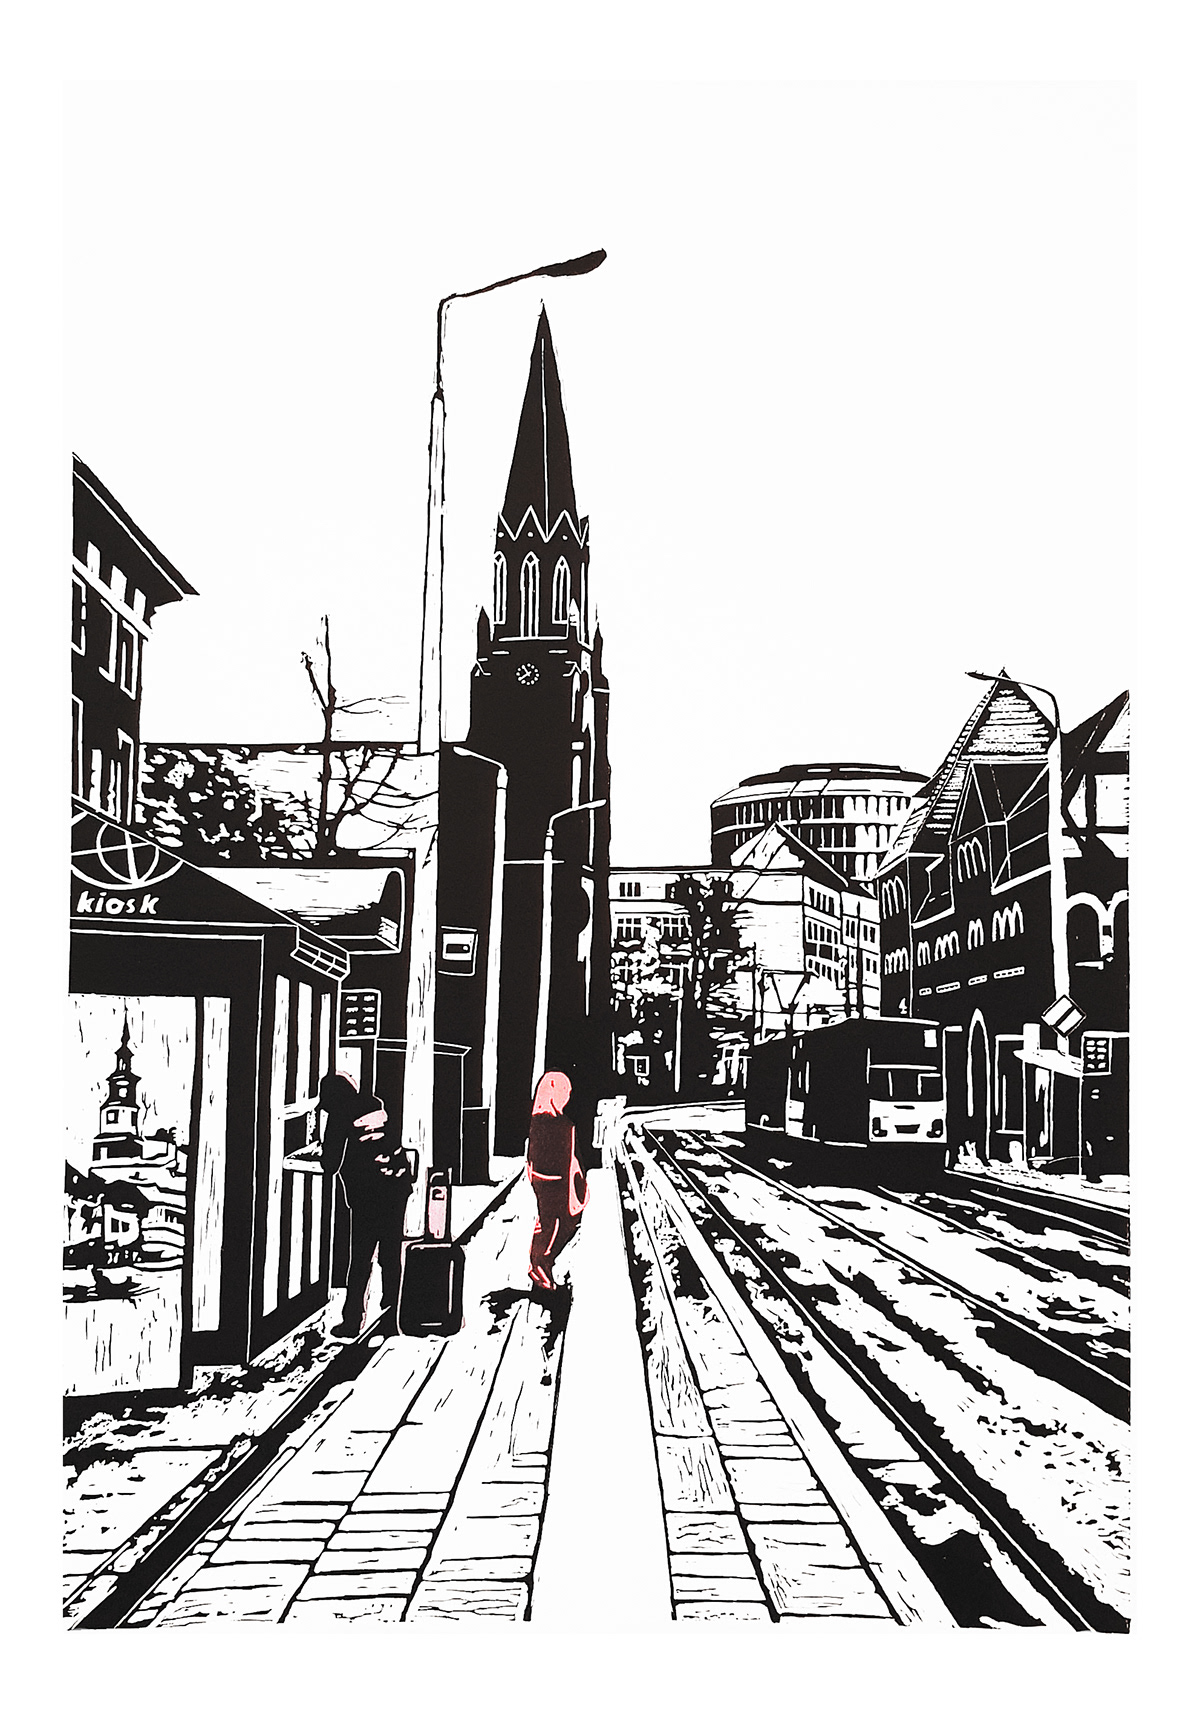 art lanscape city printmaking linocut view ILLUSTRATION  b&w poster Master